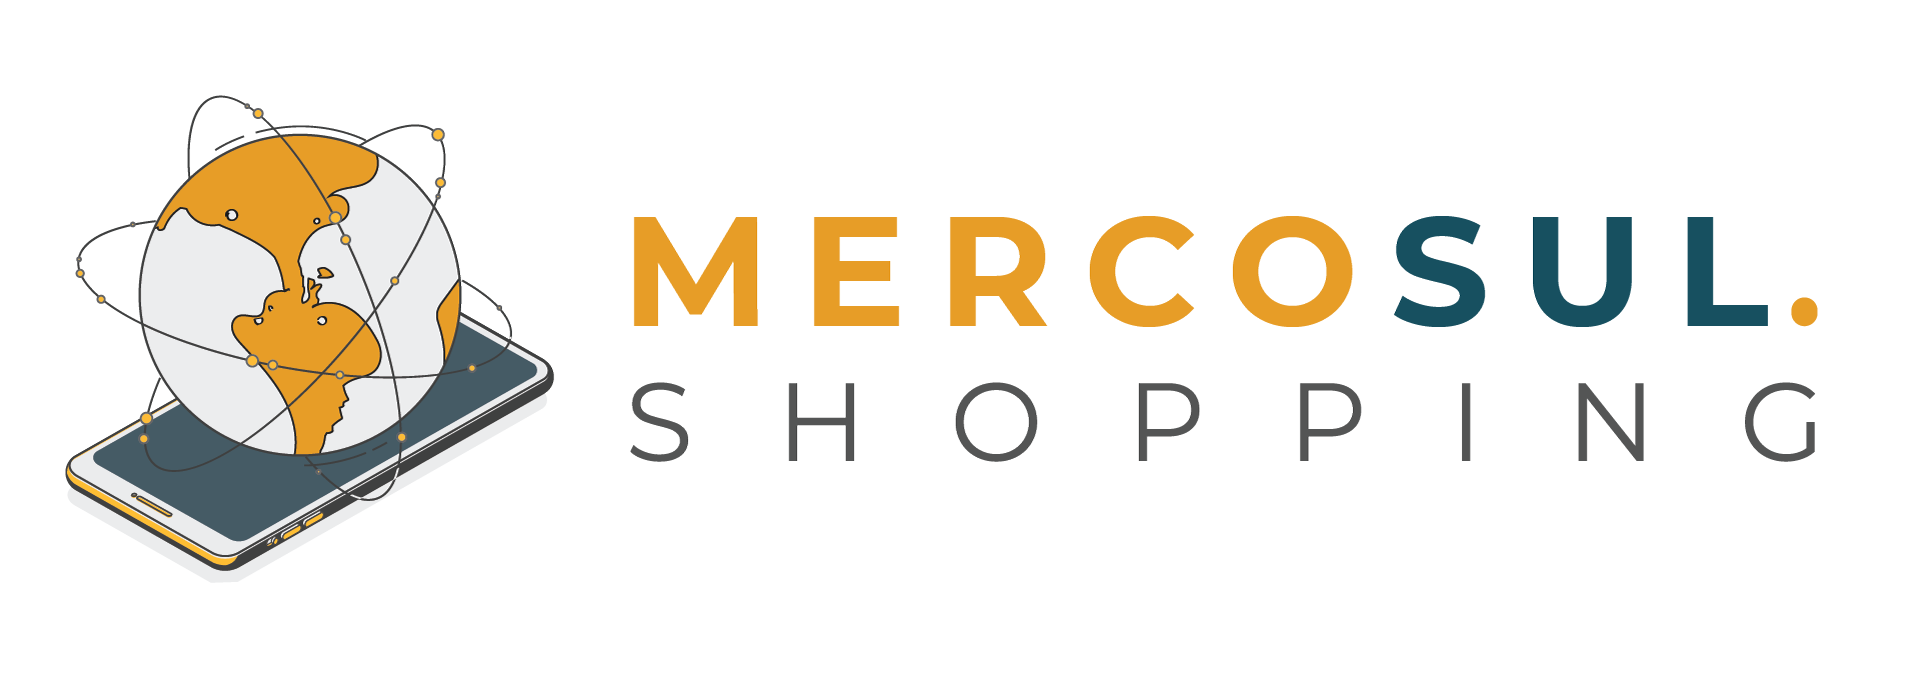 Mercosul Shopping